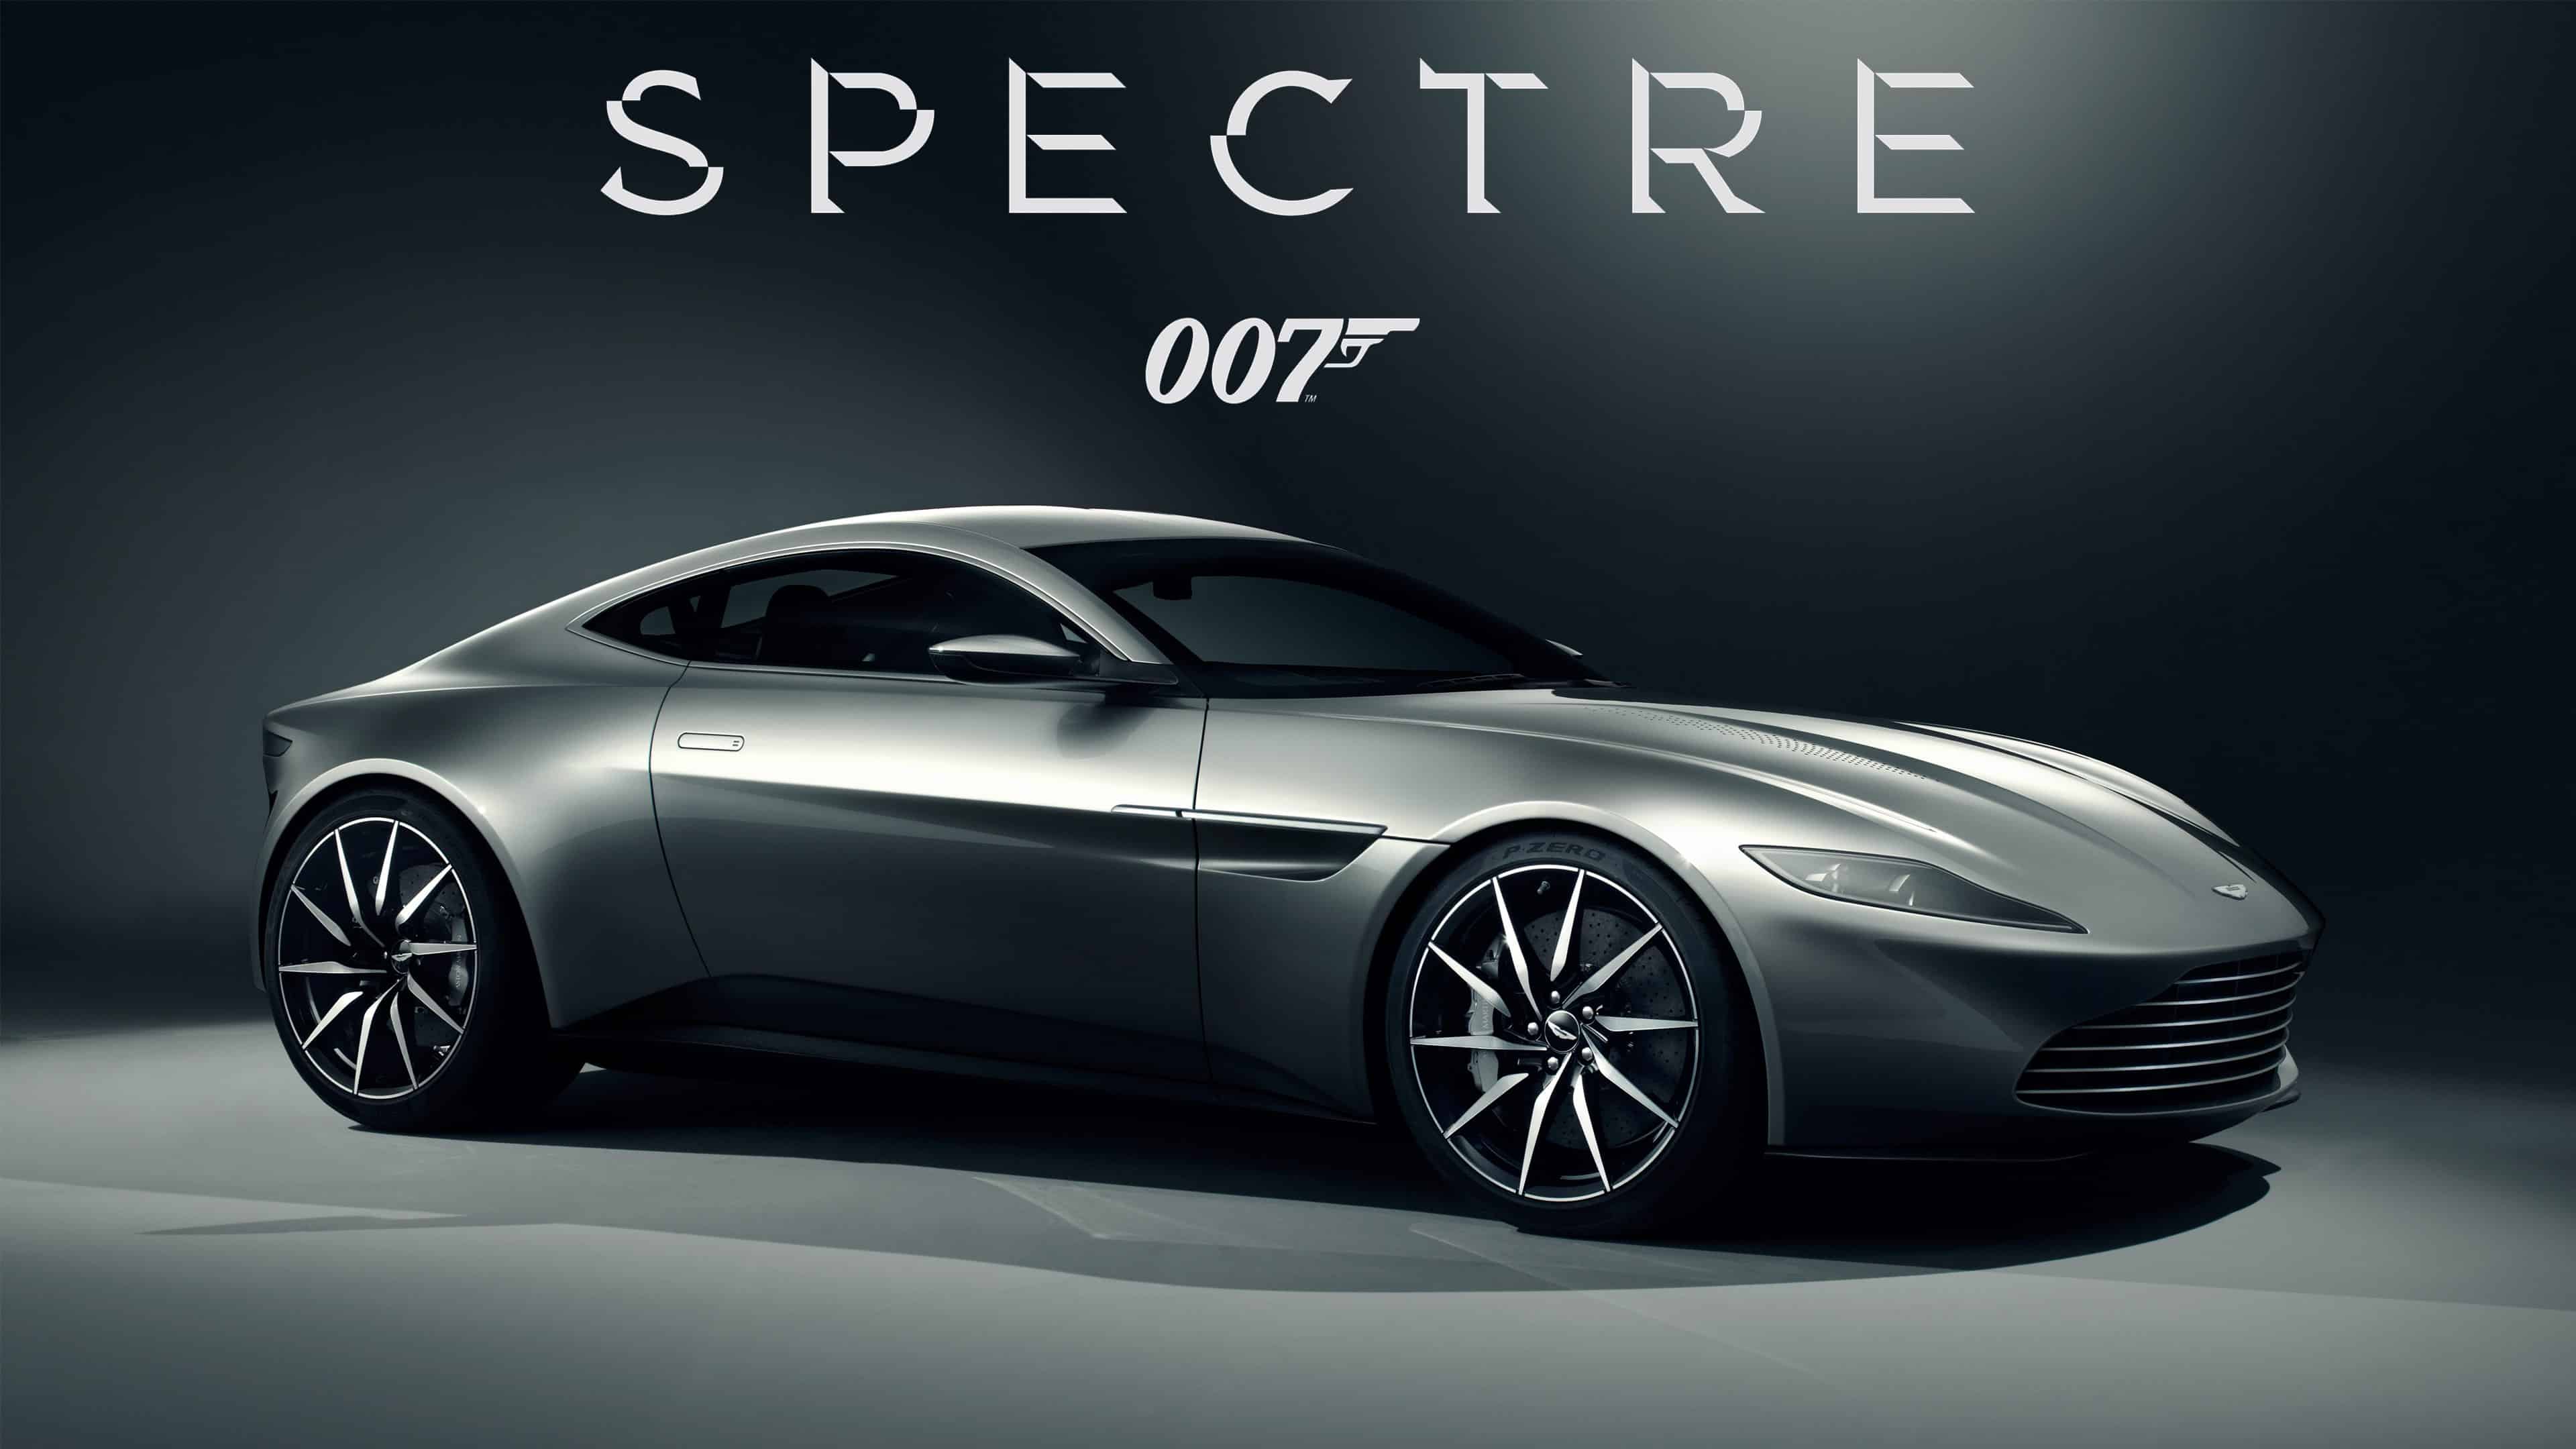 Aston Martin Db10 James Bond Spectre UHD 4k Wallpaper